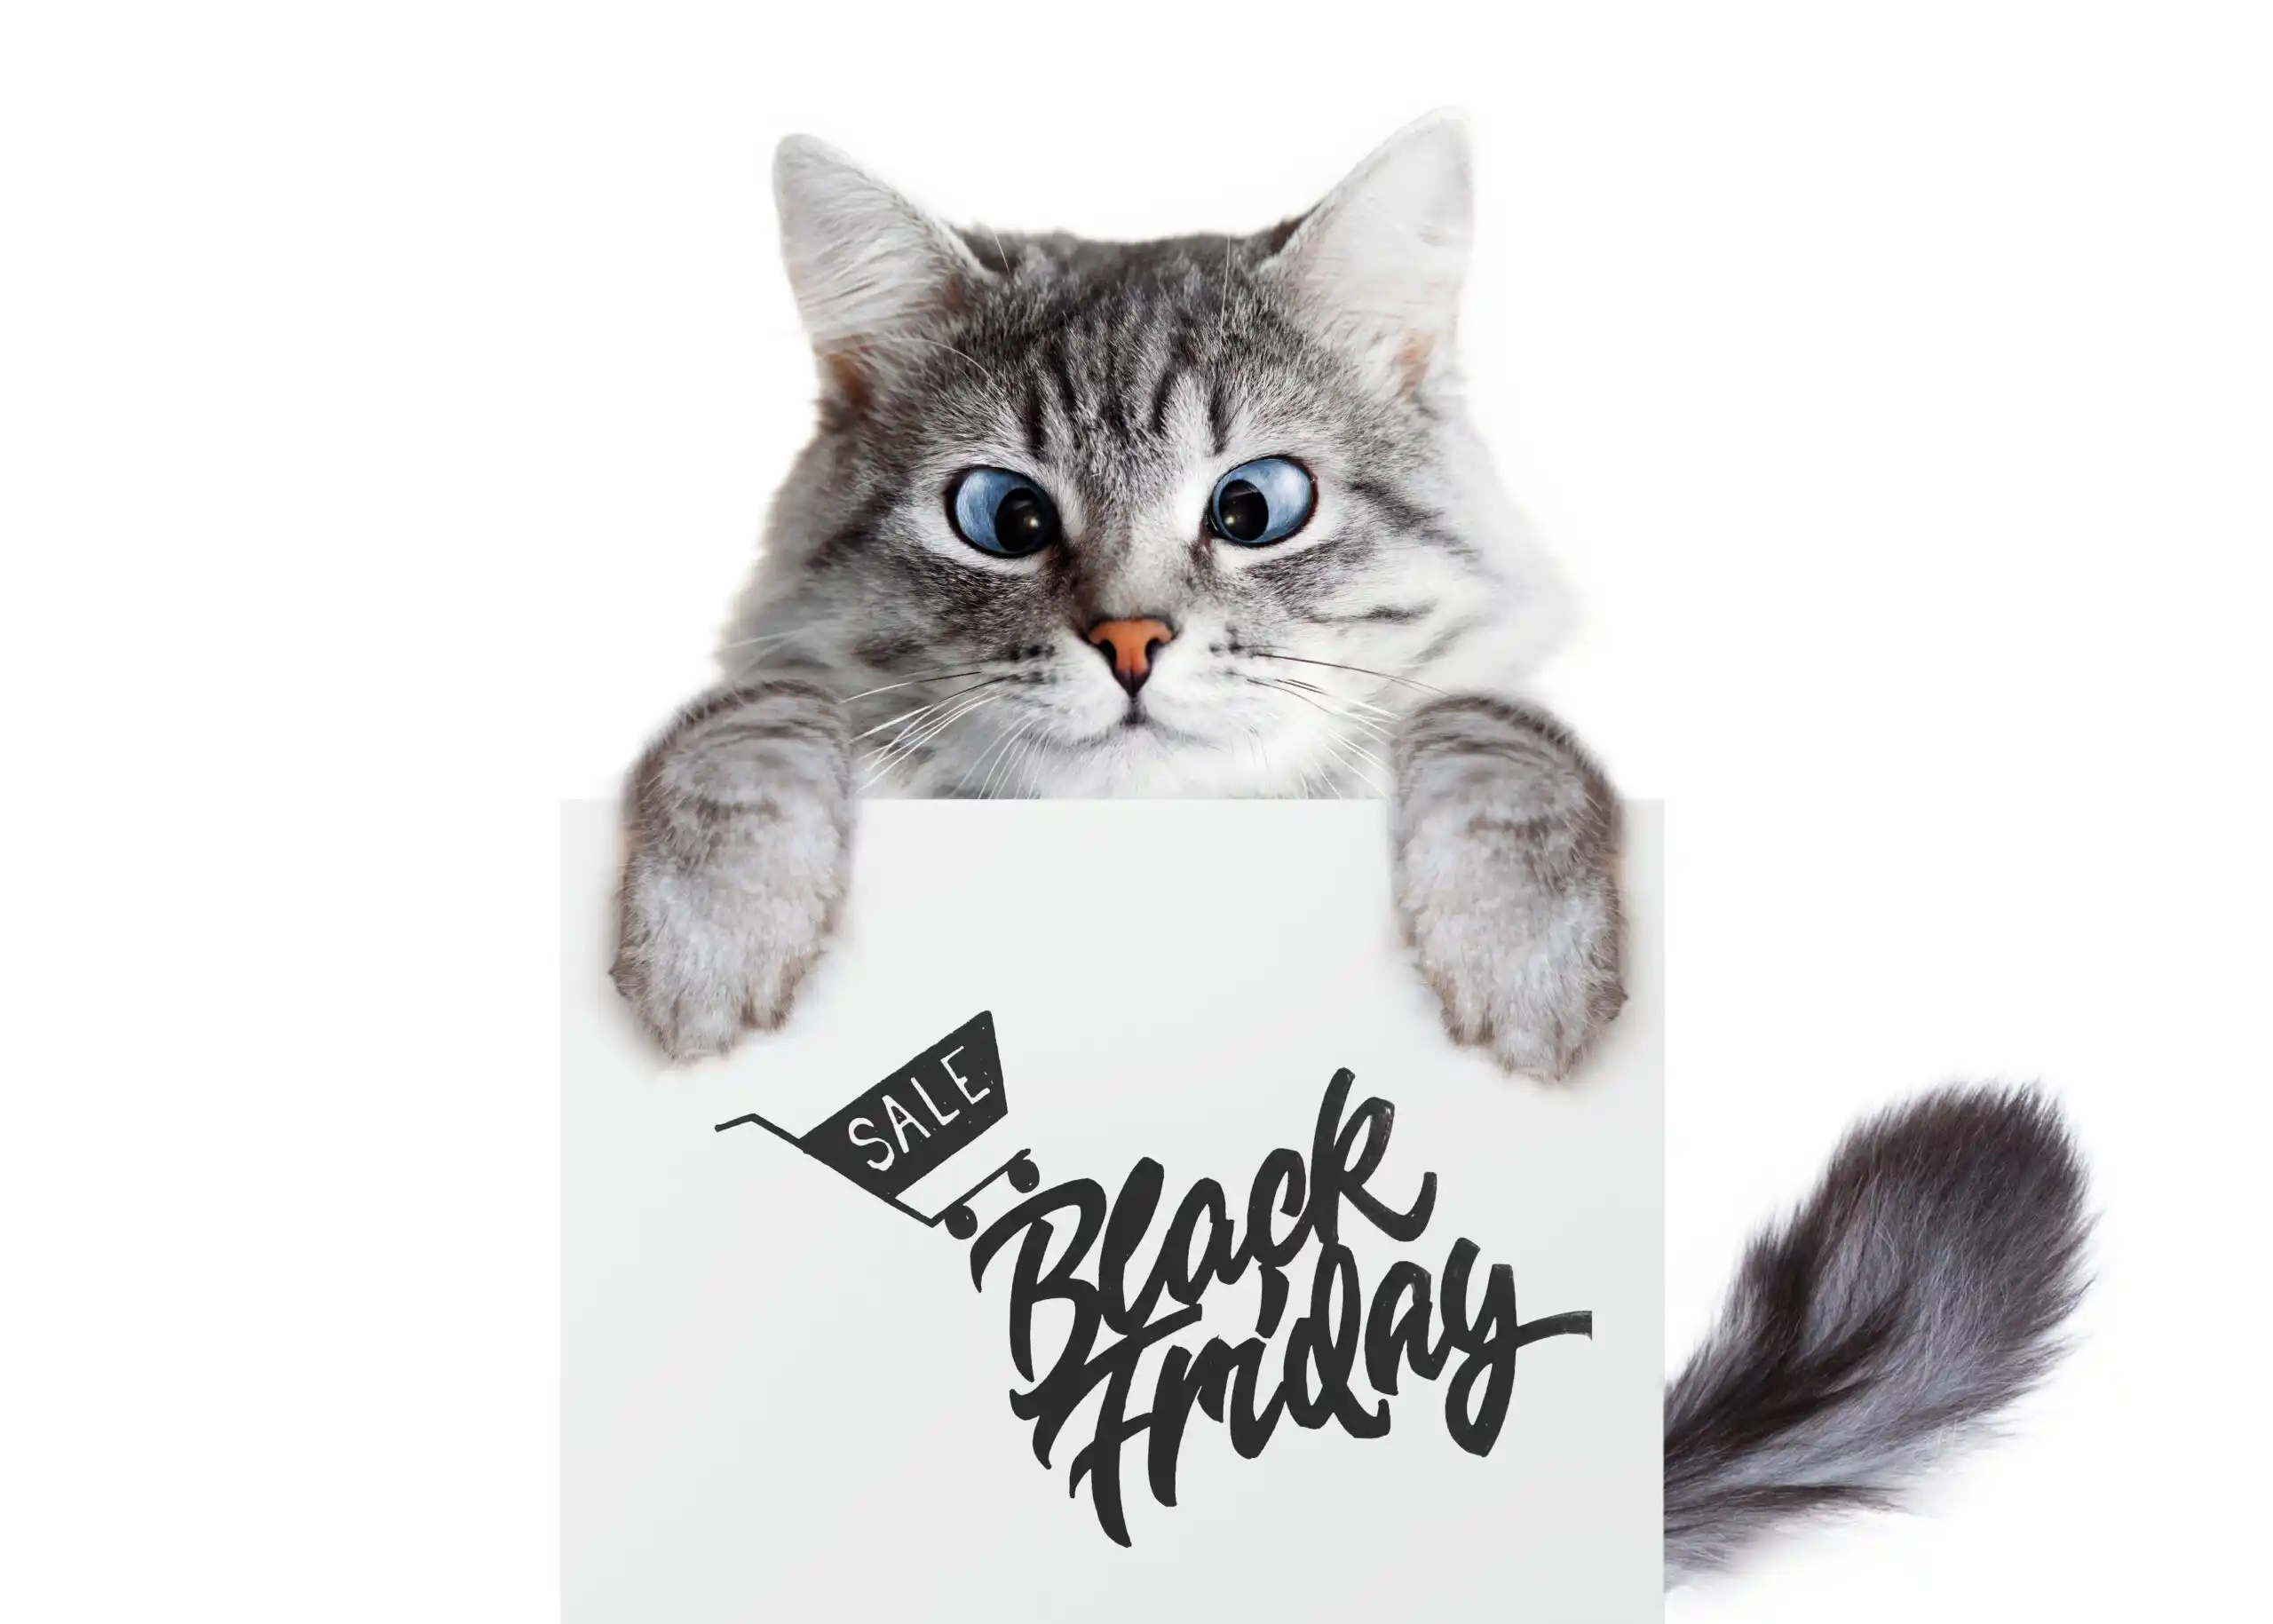 Cat Holding Black Friday Sale Sign